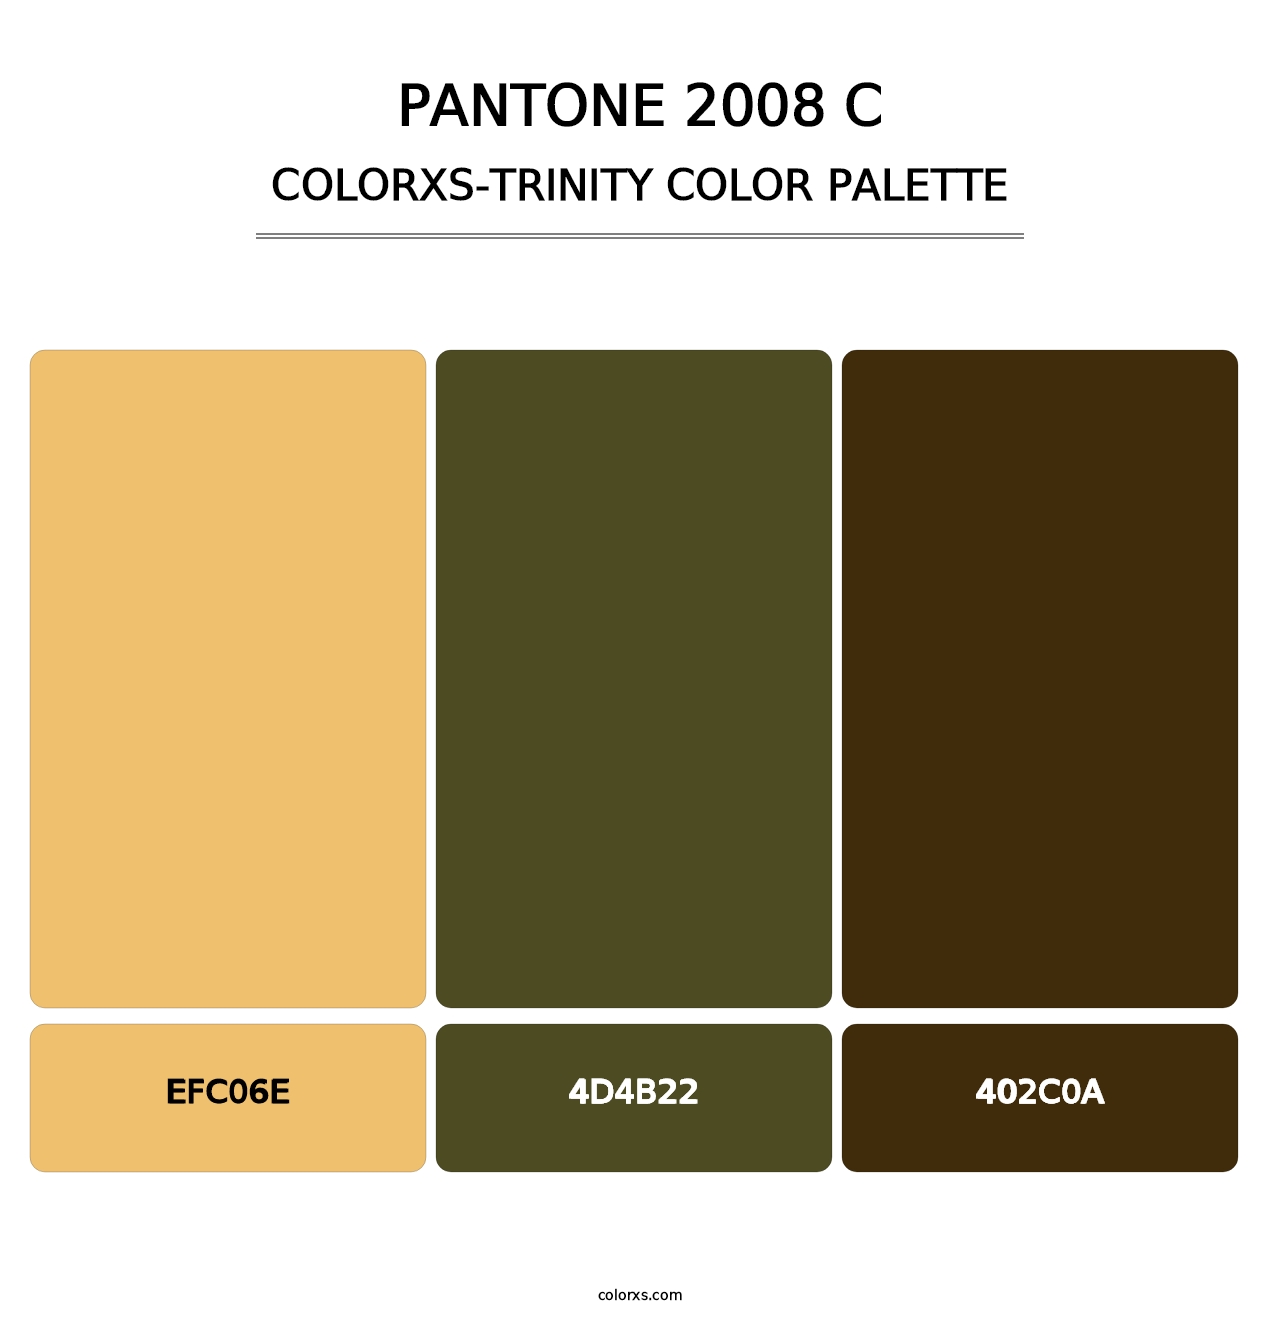 PANTONE 2008 C - Colorxs Trinity Palette